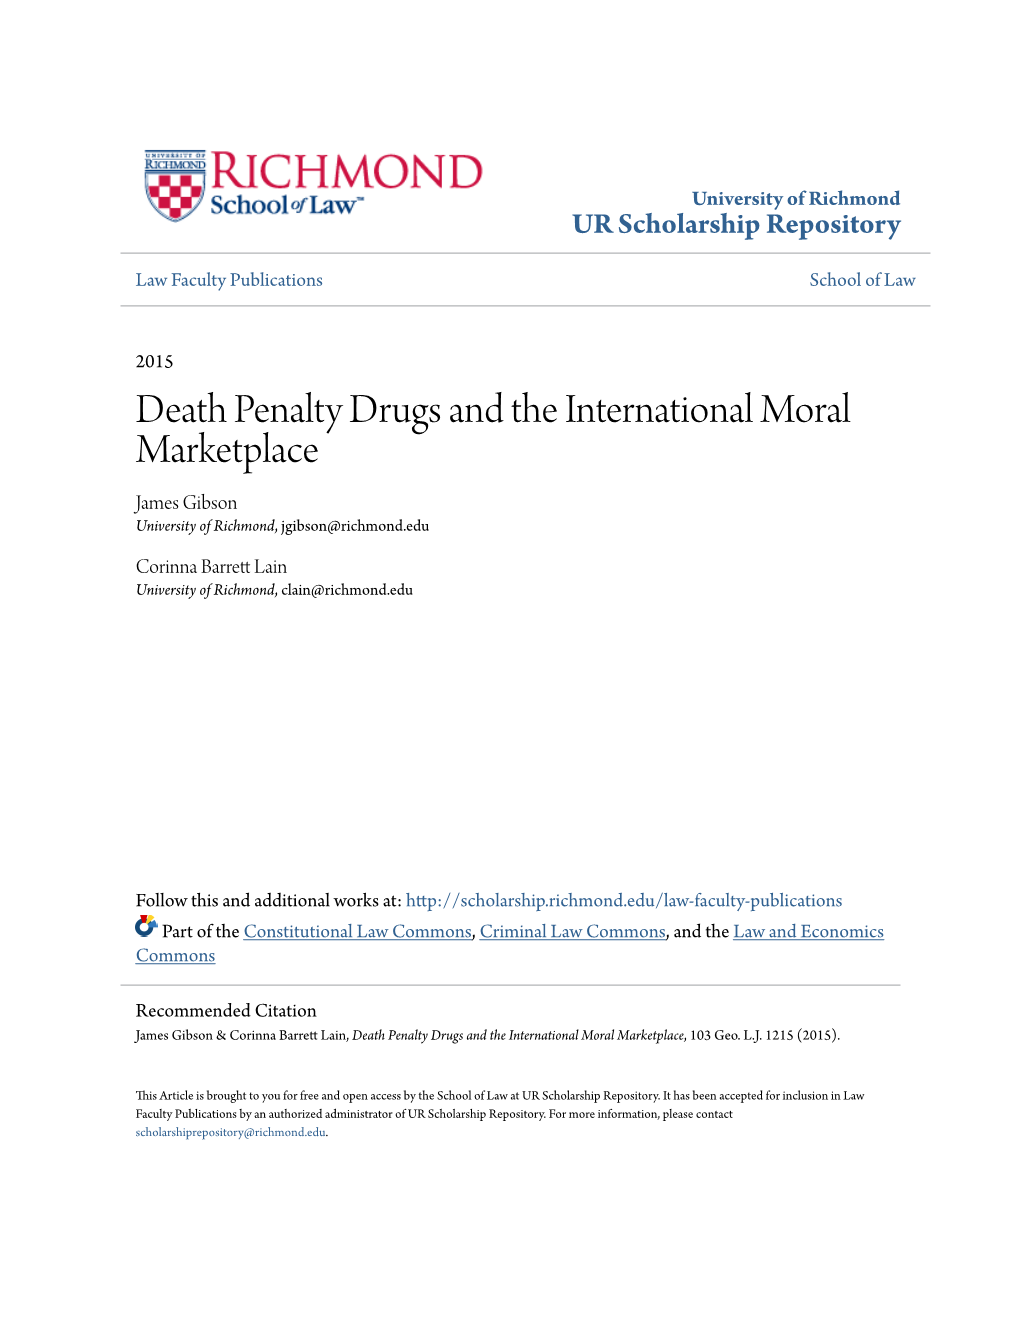 Death Penalty Drugs and the International Moral Marketplace James Gibson University of Richmond, Jgibson@Richmond.Edu